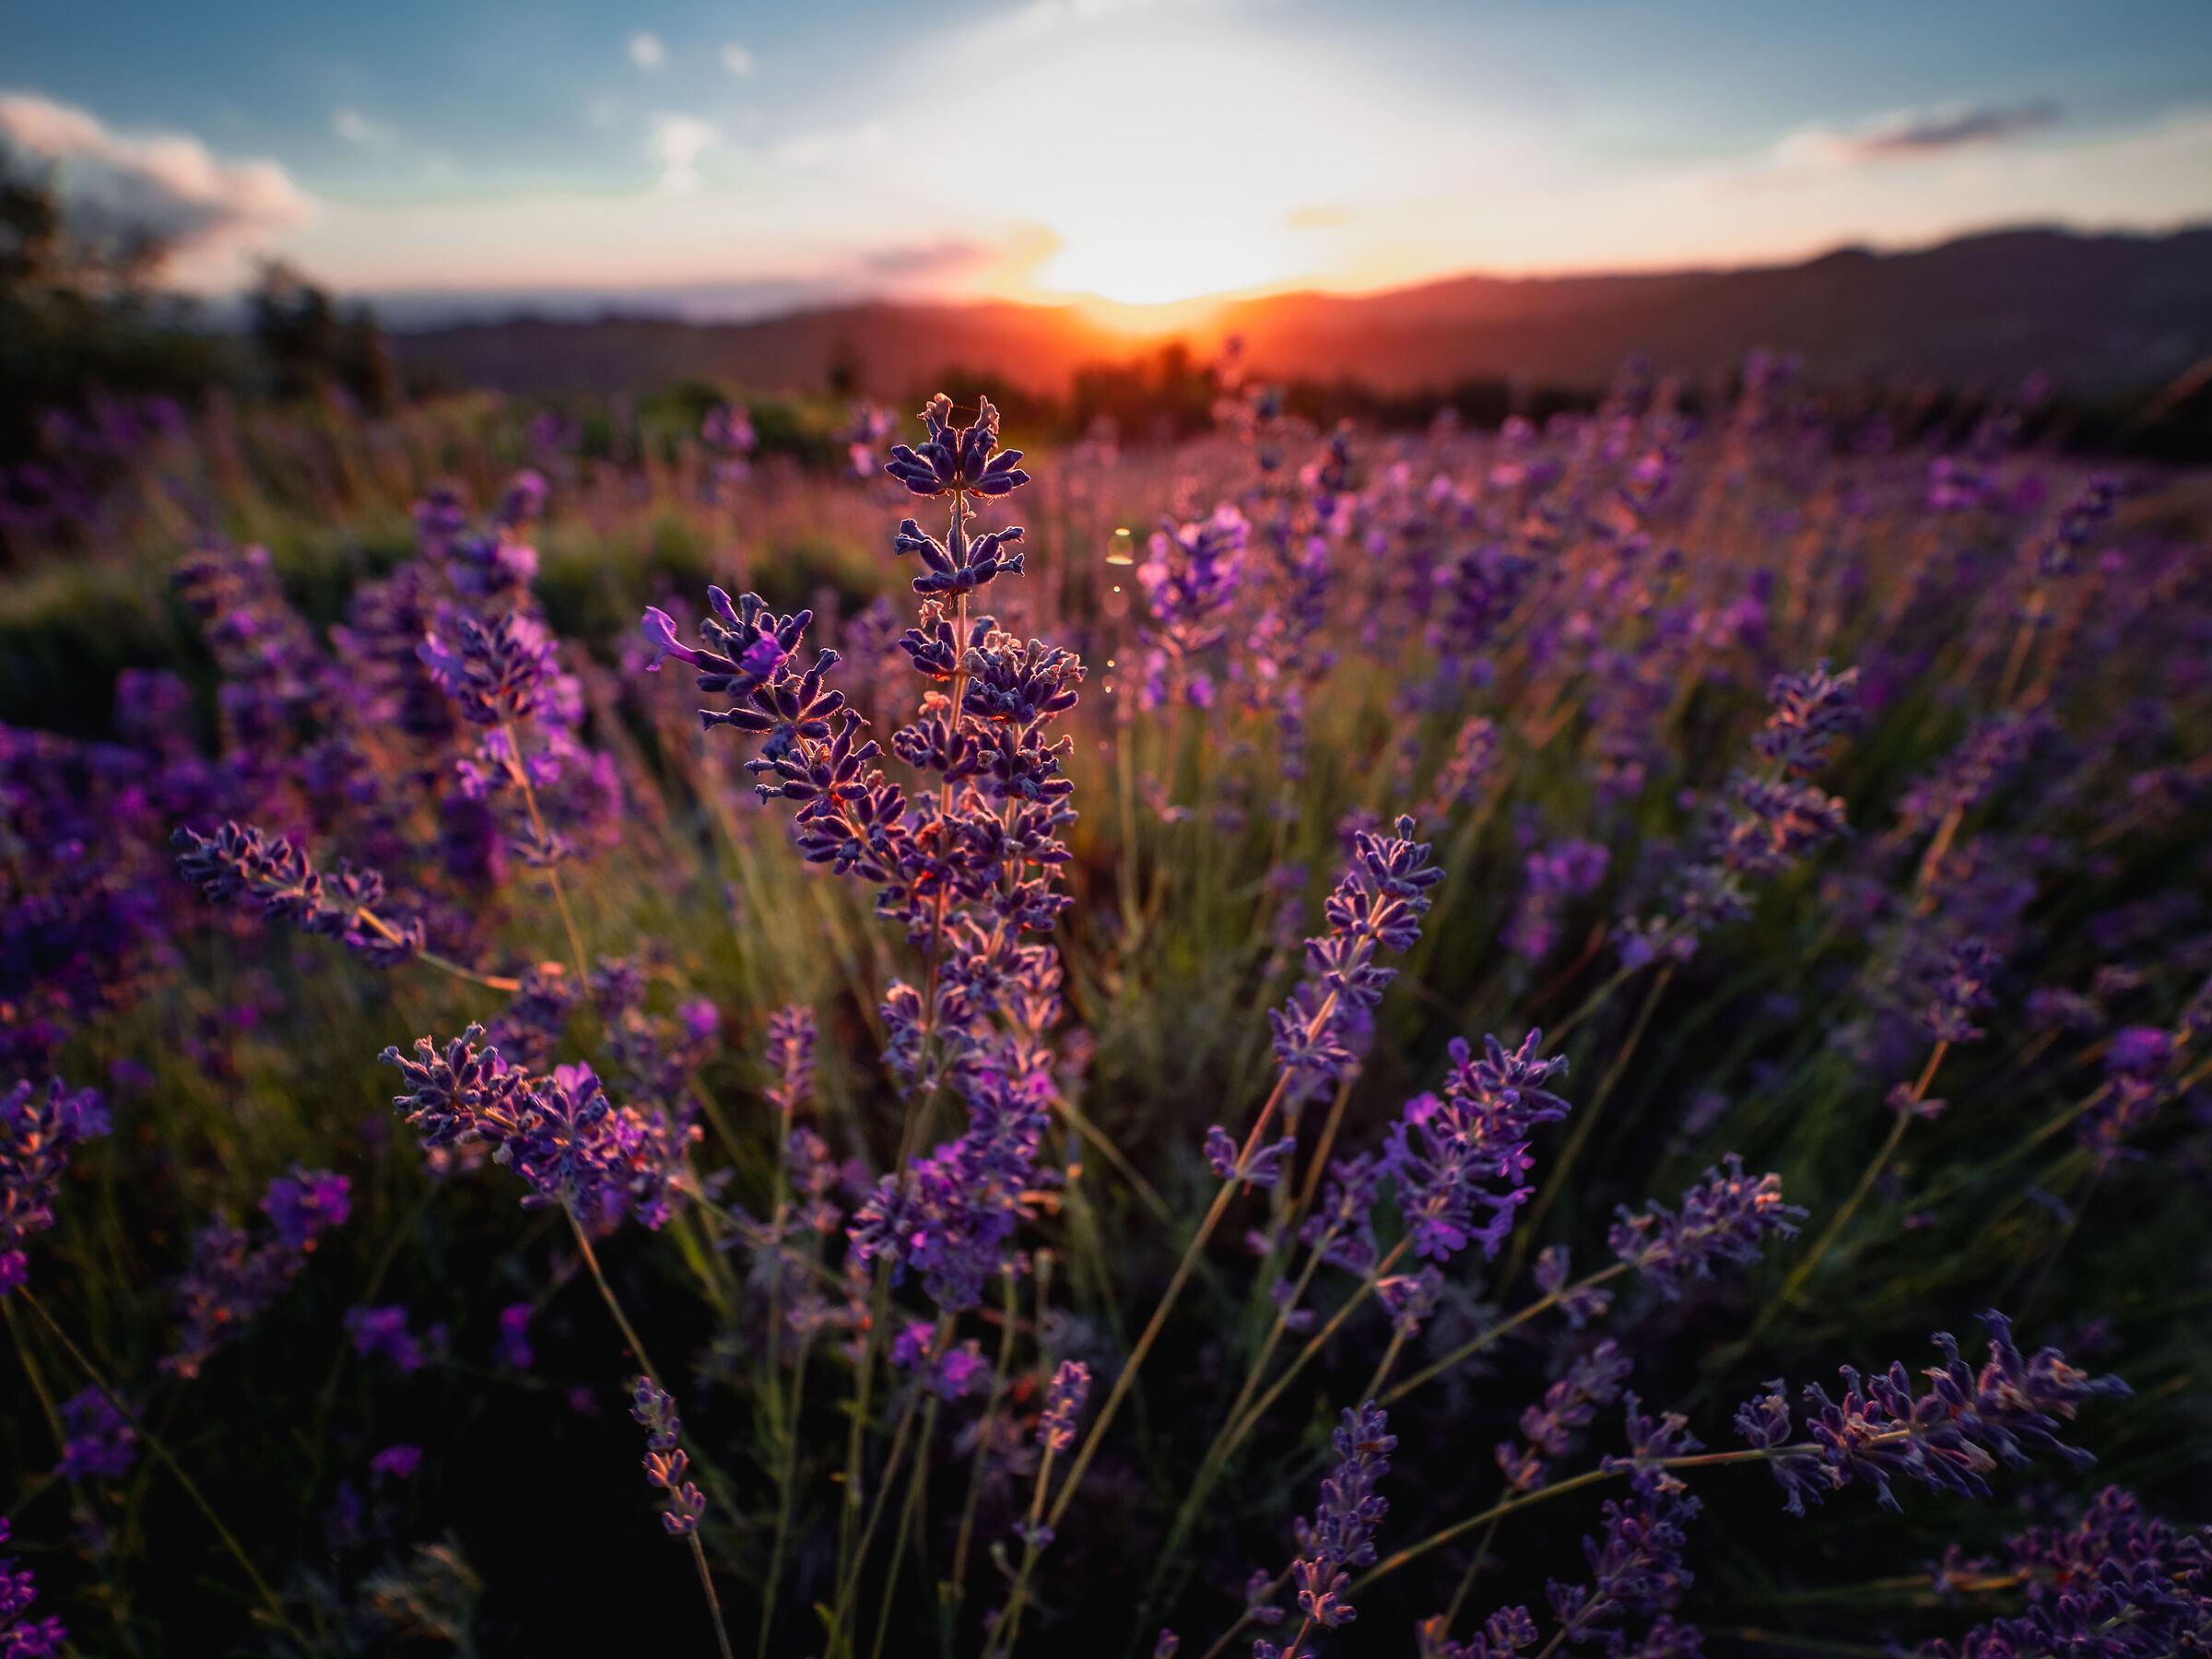 Lavender at sunset...